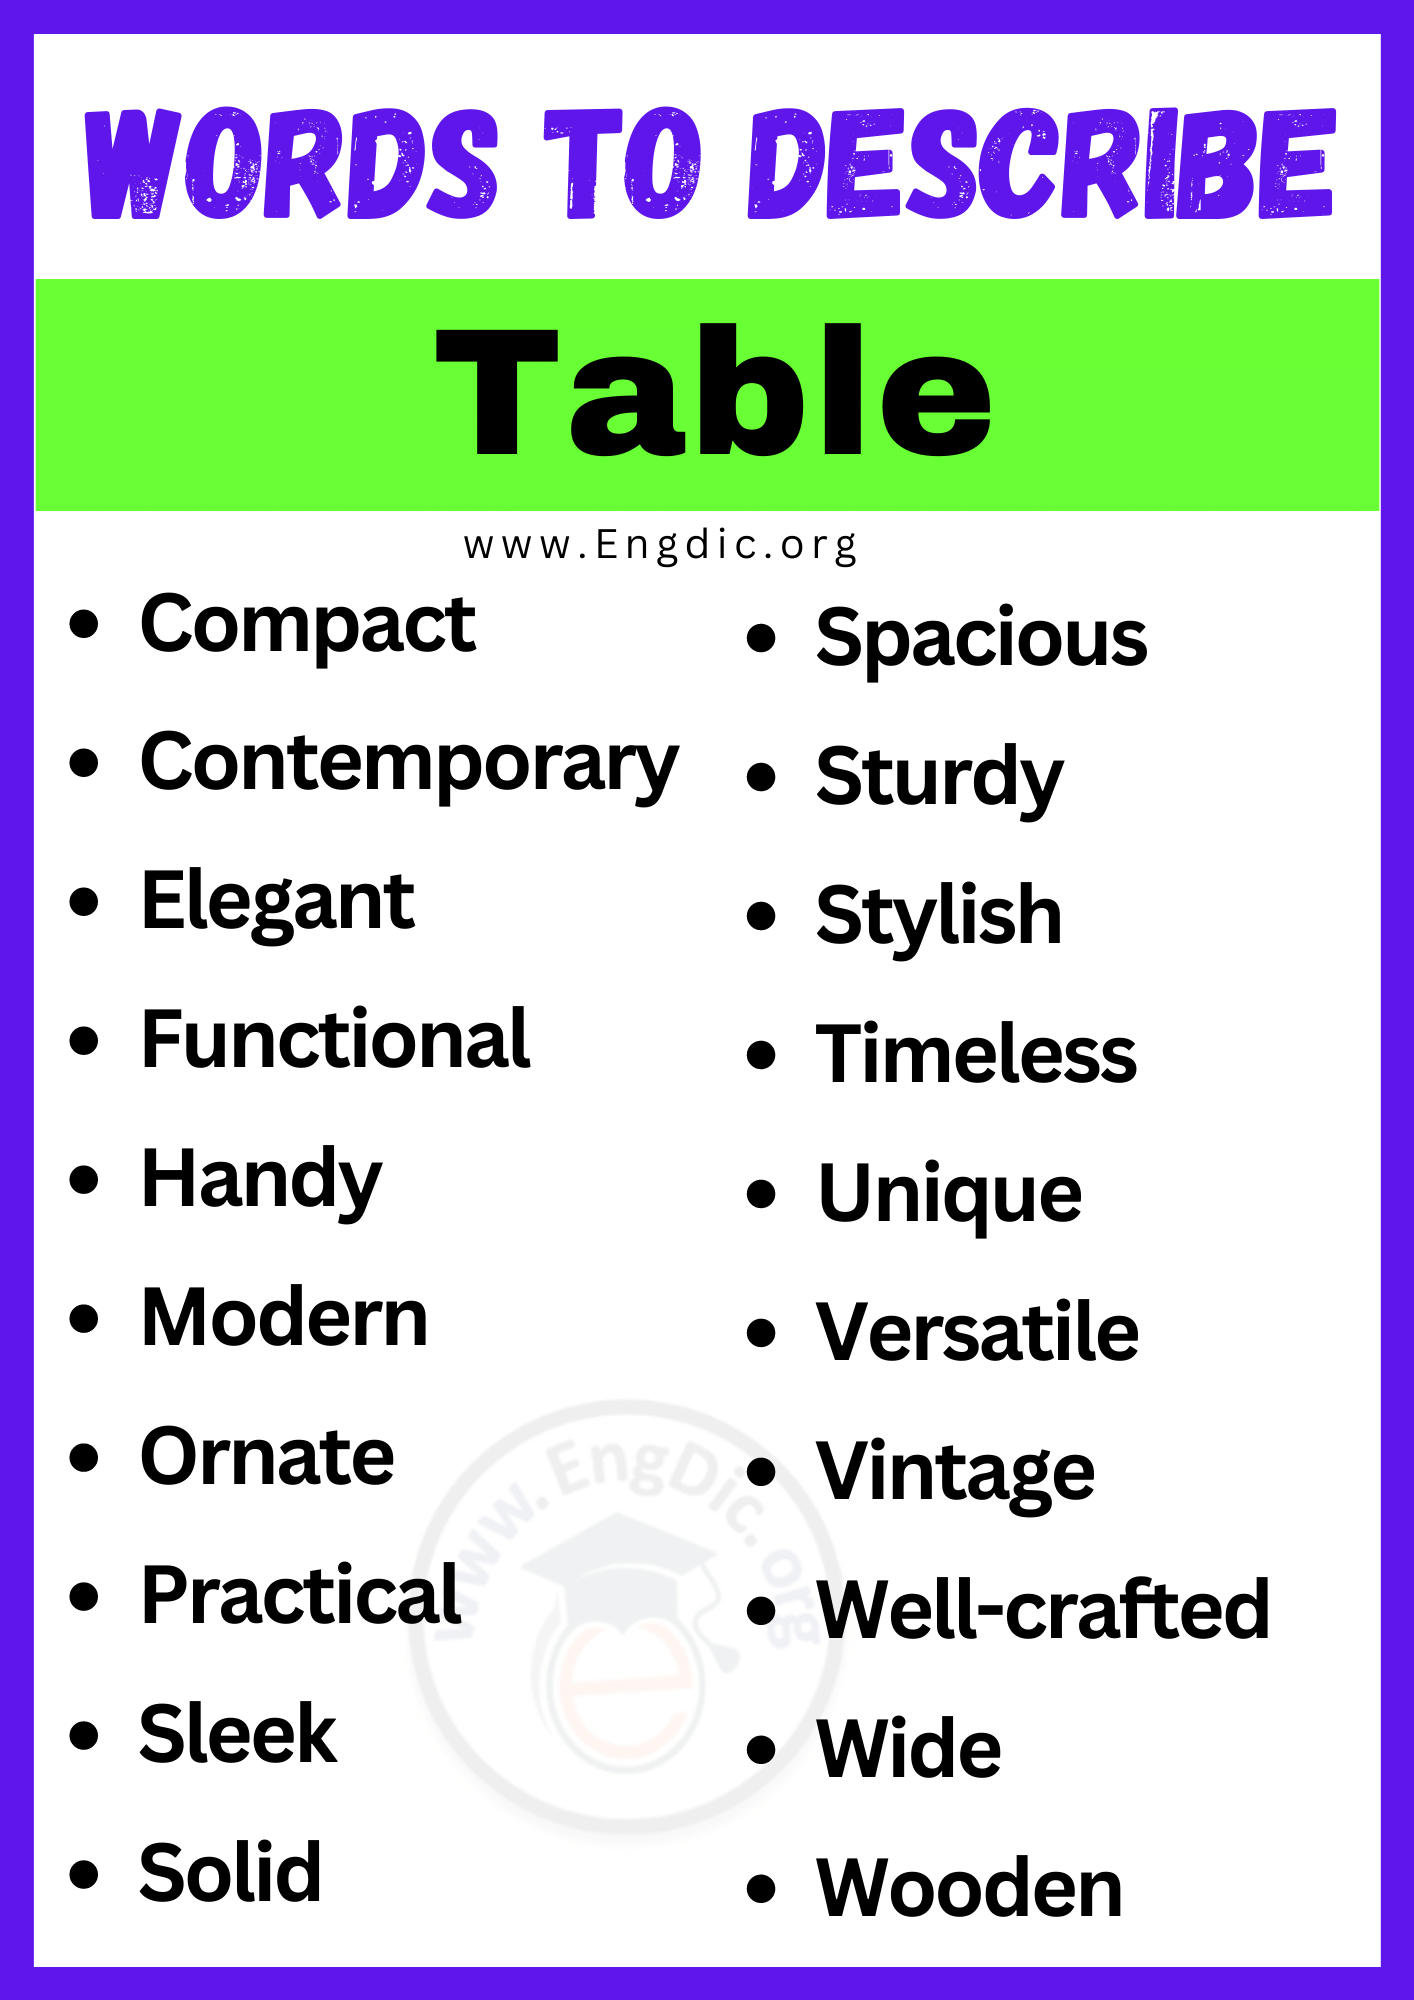 Words to Describe Table